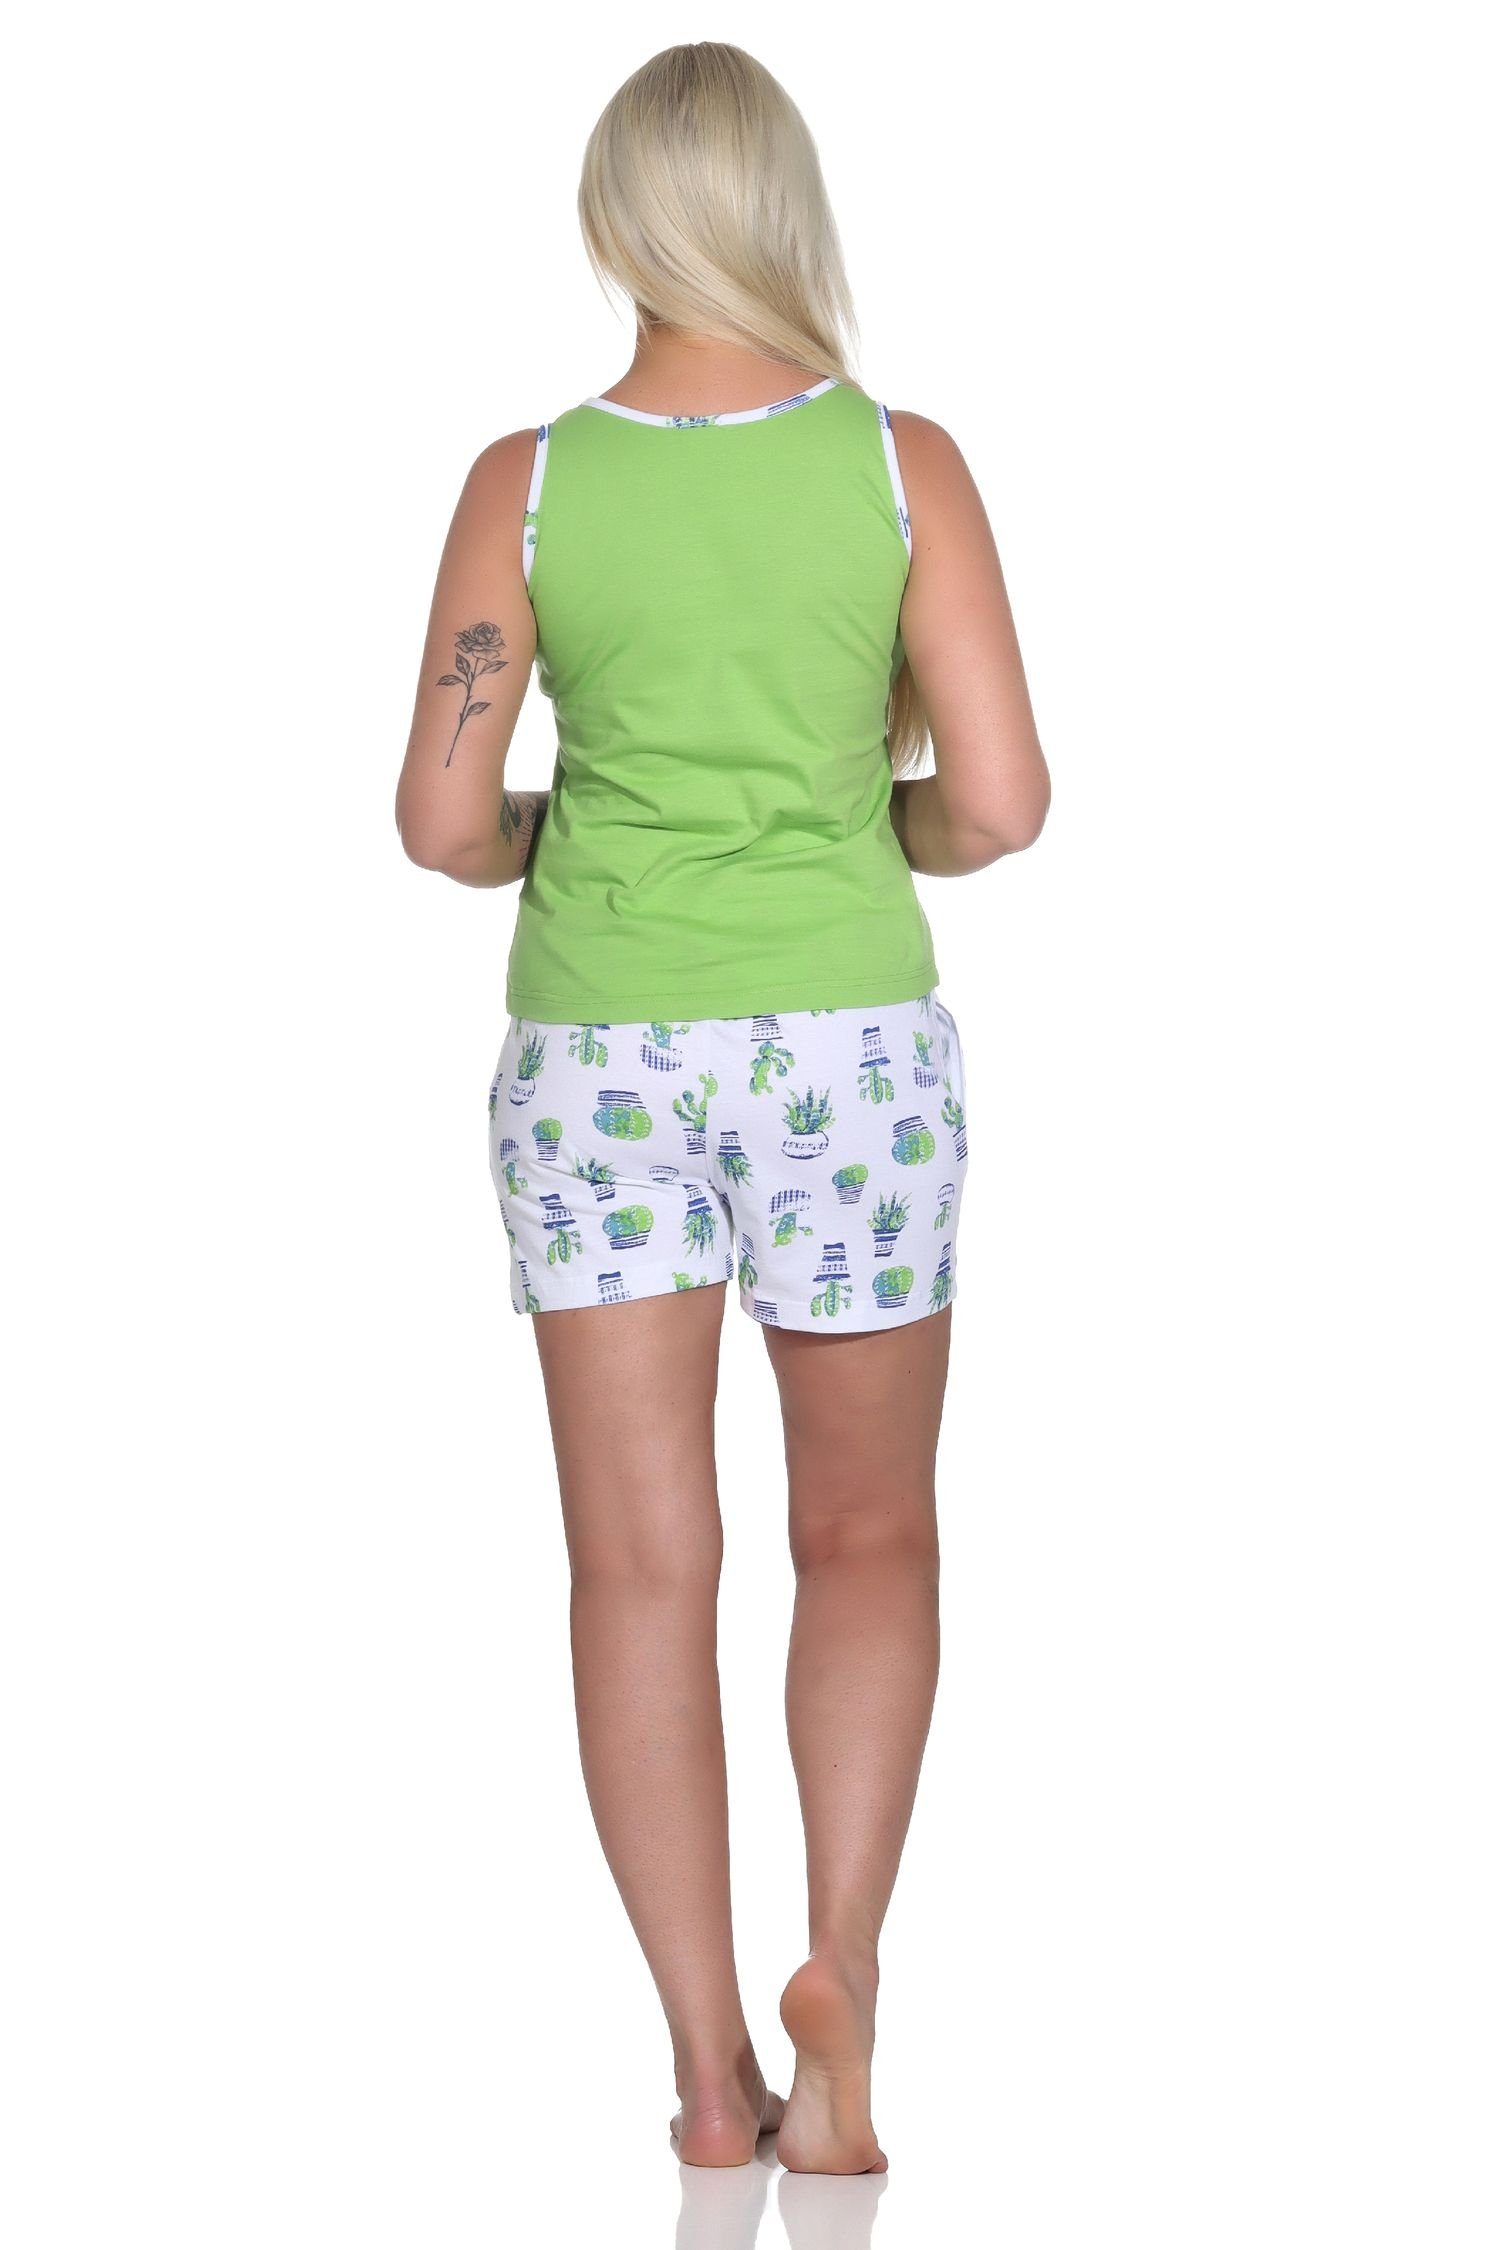 Normann Pyjama Ärmelloser Damen Schlafanzug mit Kaktus als Pyjama Motiv Shorty grün